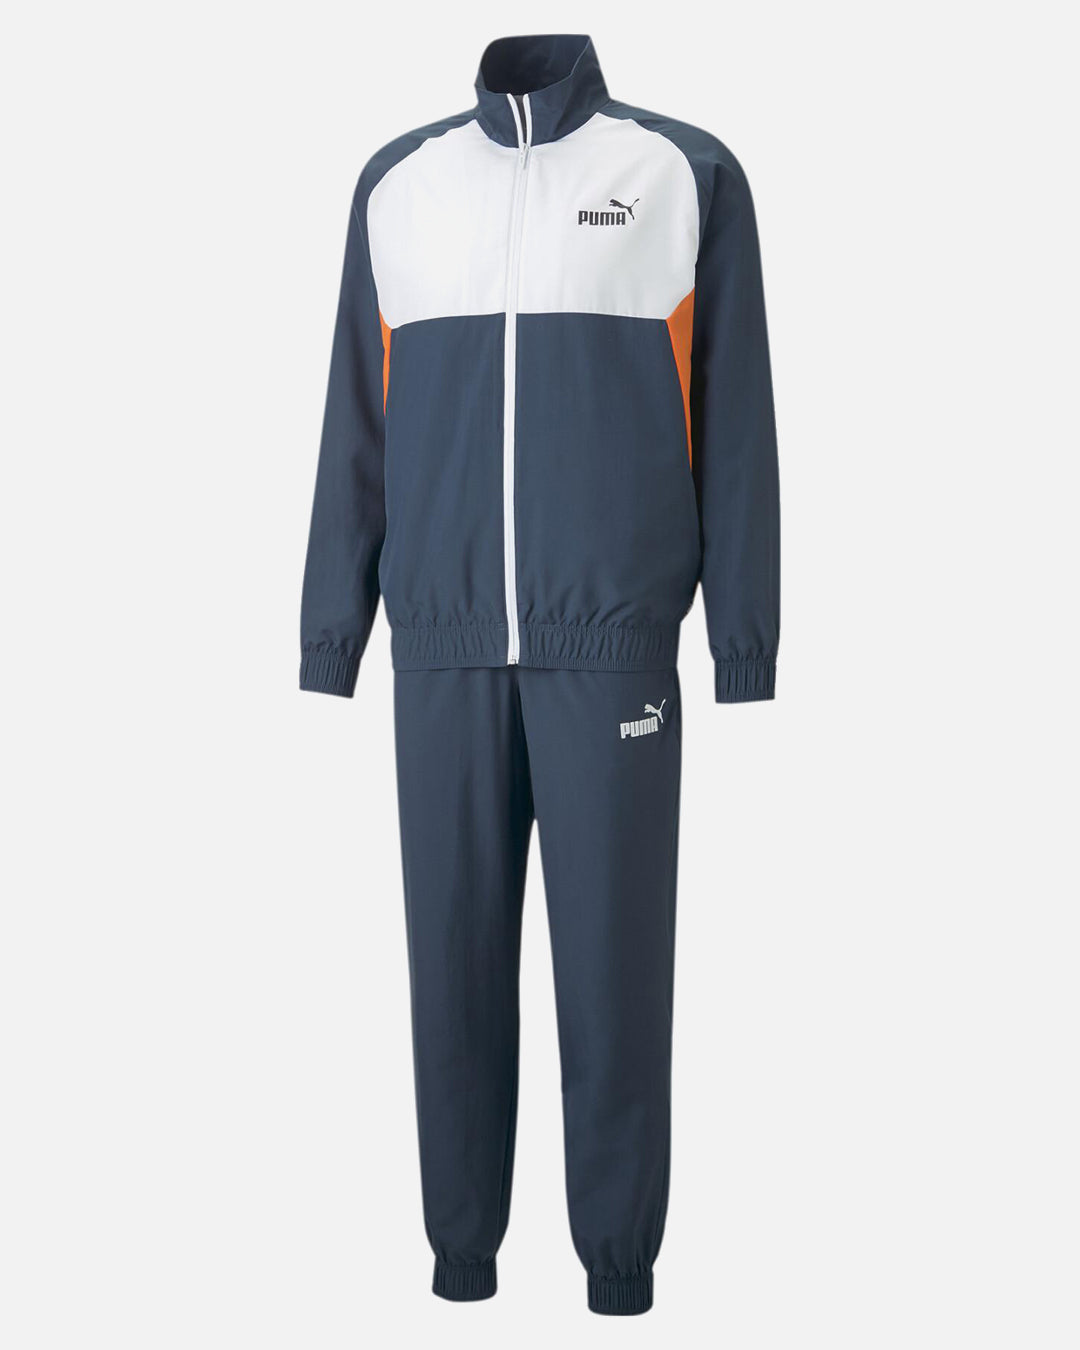 Puma Trainingsanzug – Blau/Weiß/Orange